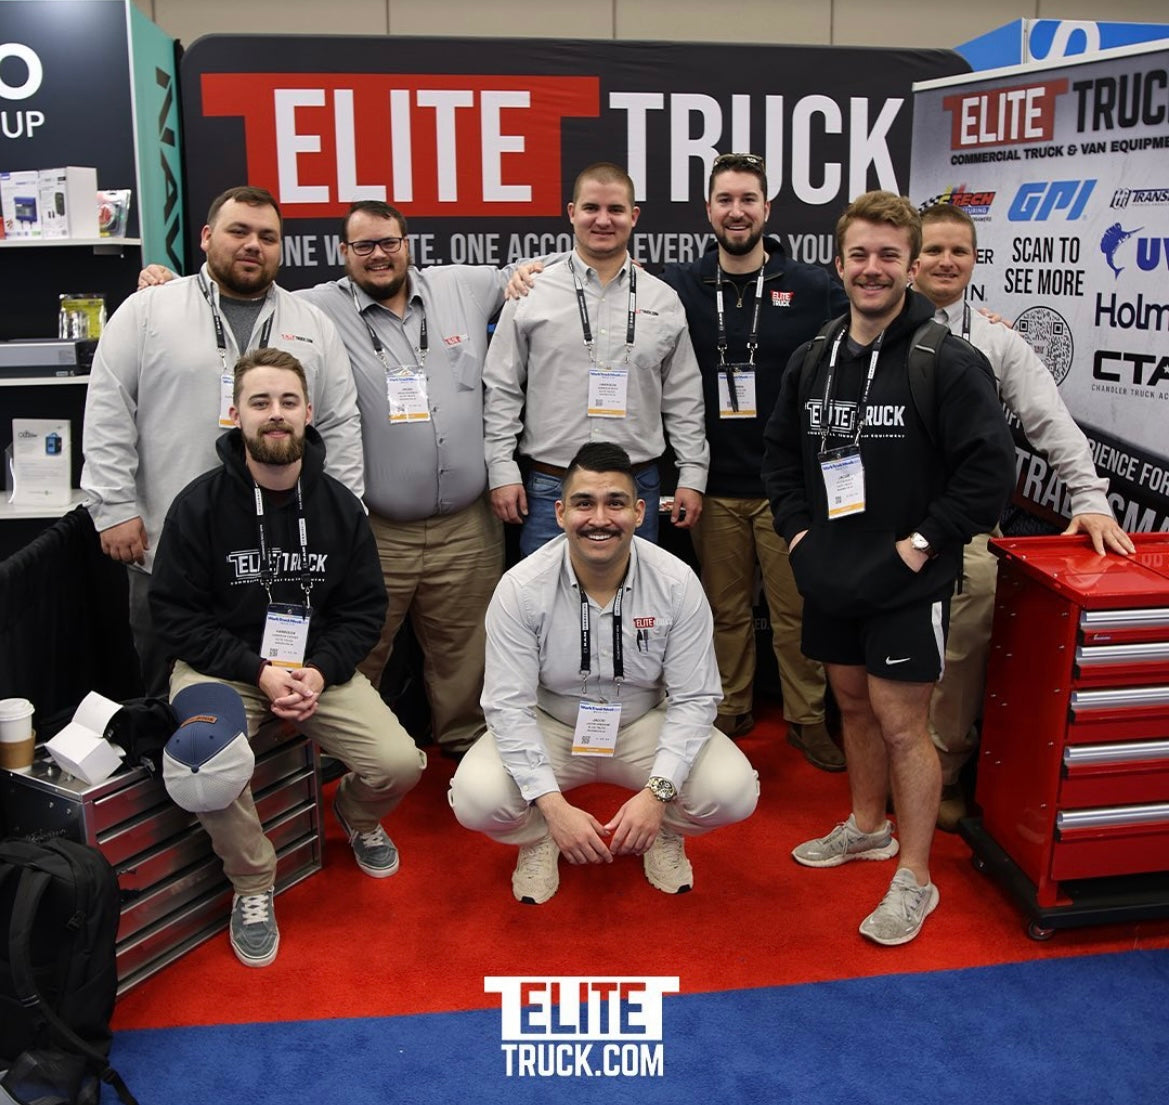 Elite Truck - Merritt Product Knowledge